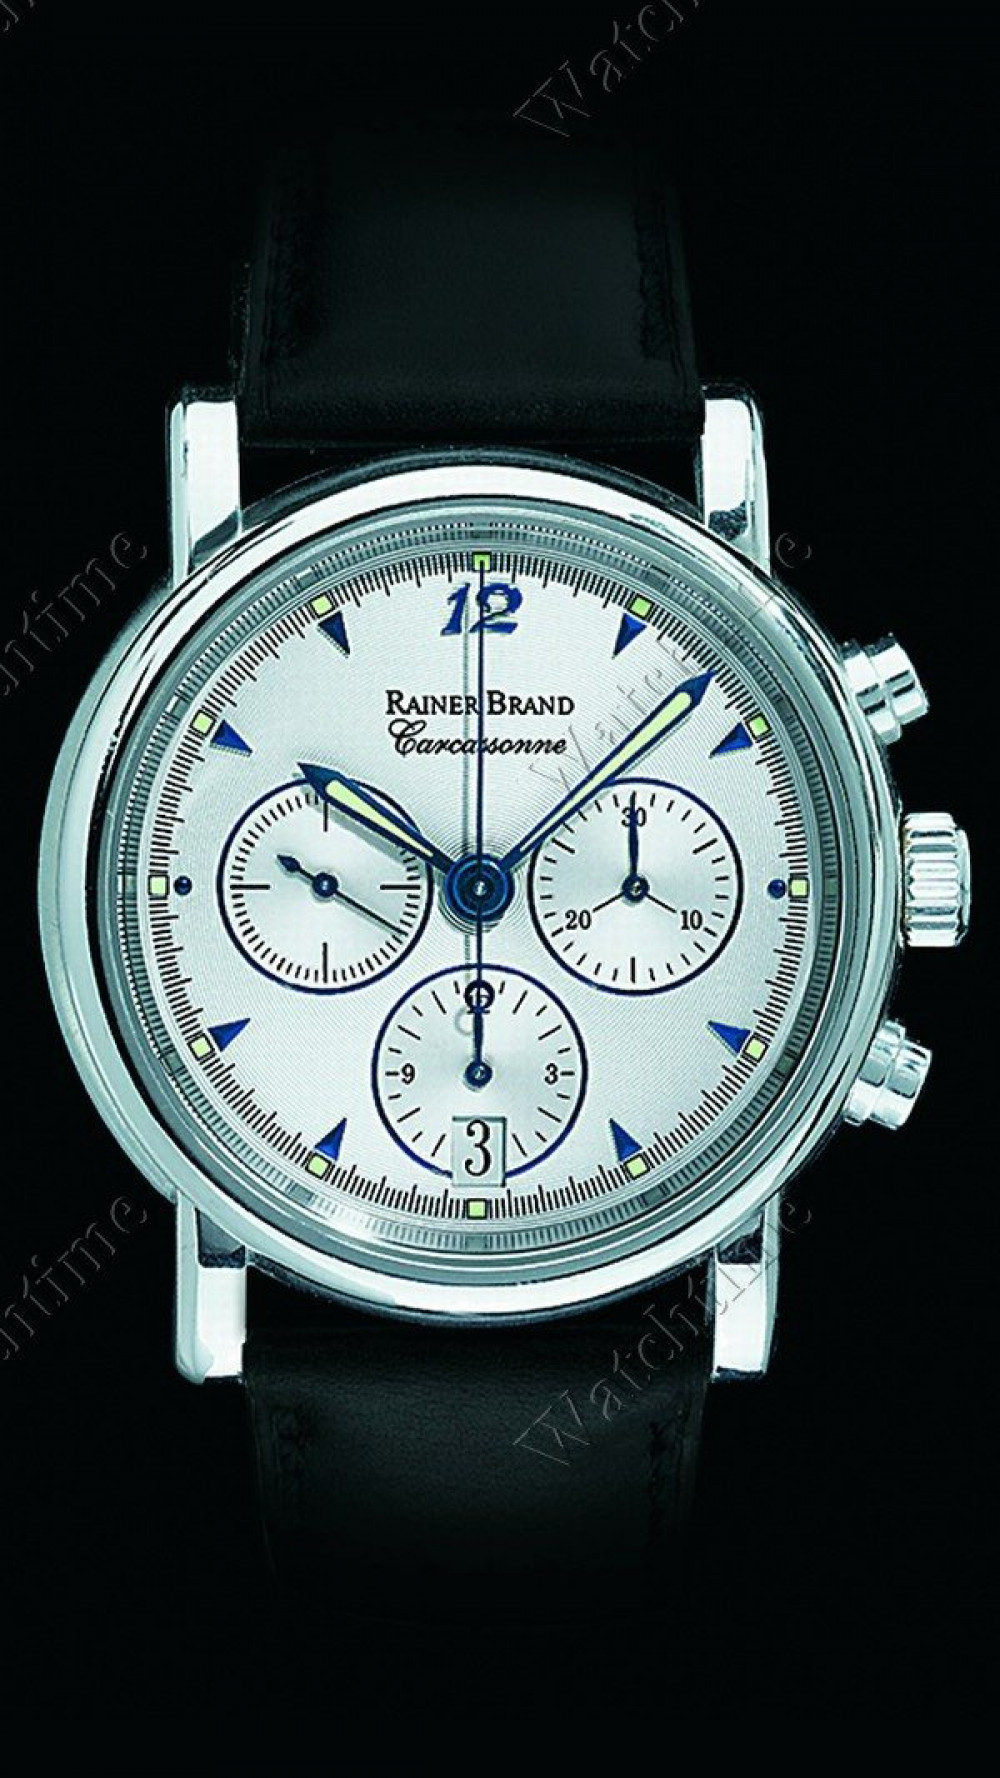 Zegarek firmy Rainer Brand, model Carcassonne